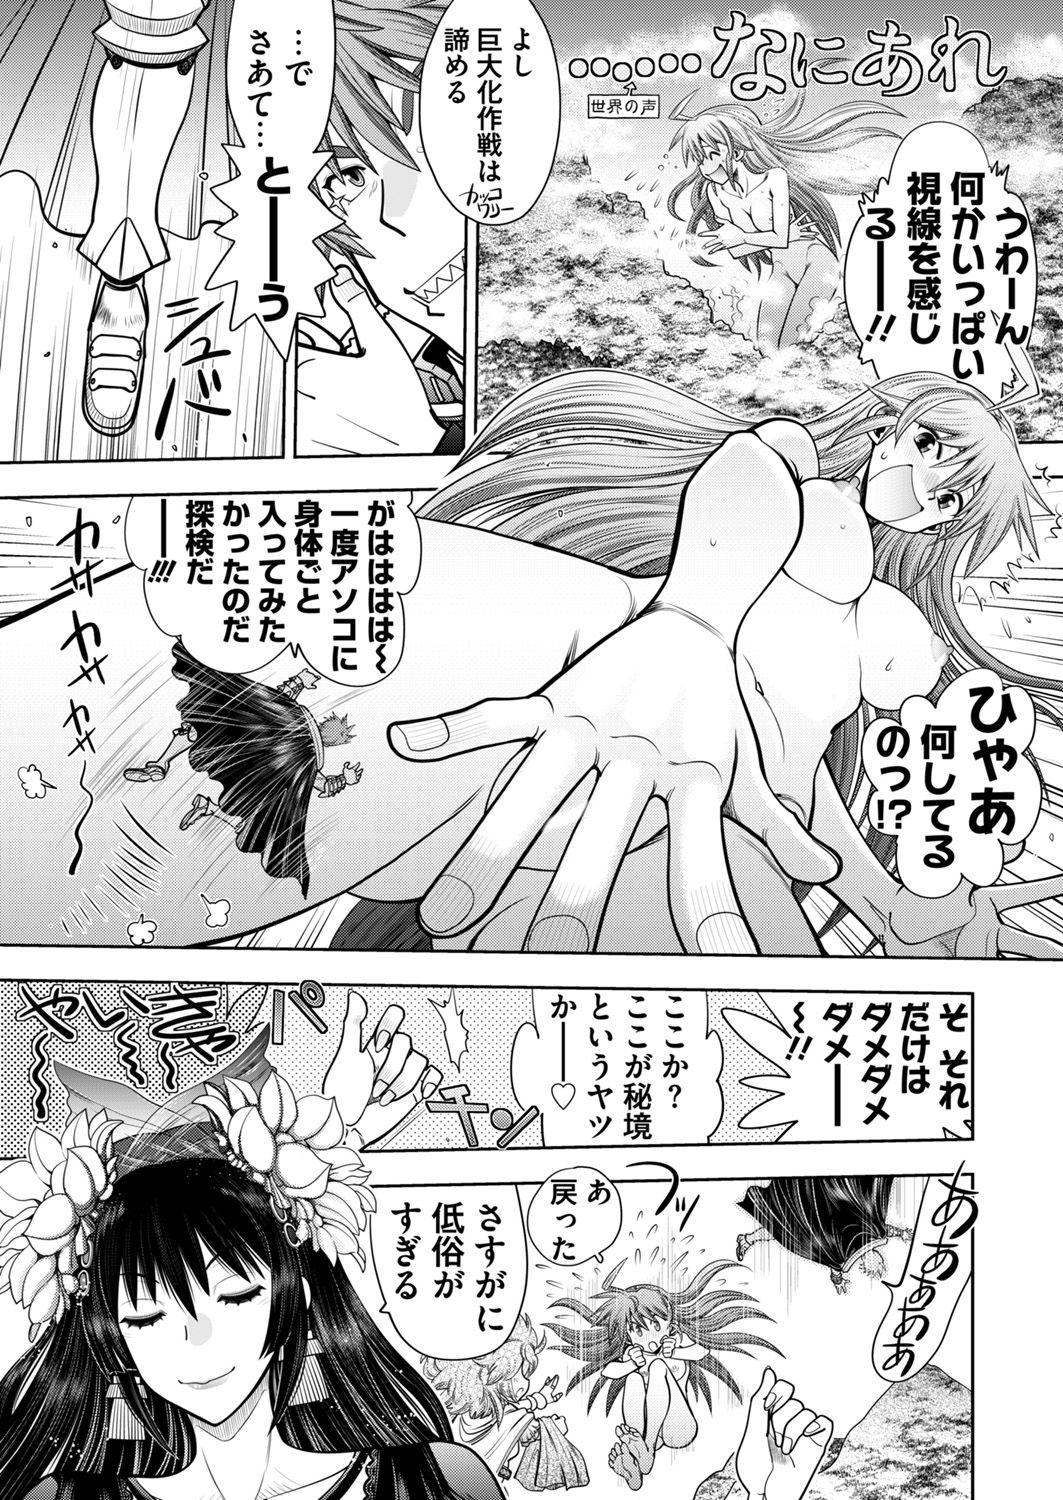 Slut [Yagami Dai] Rance 10 -Kessen- Ch 03-05 - Rance Blackdick - Page 5